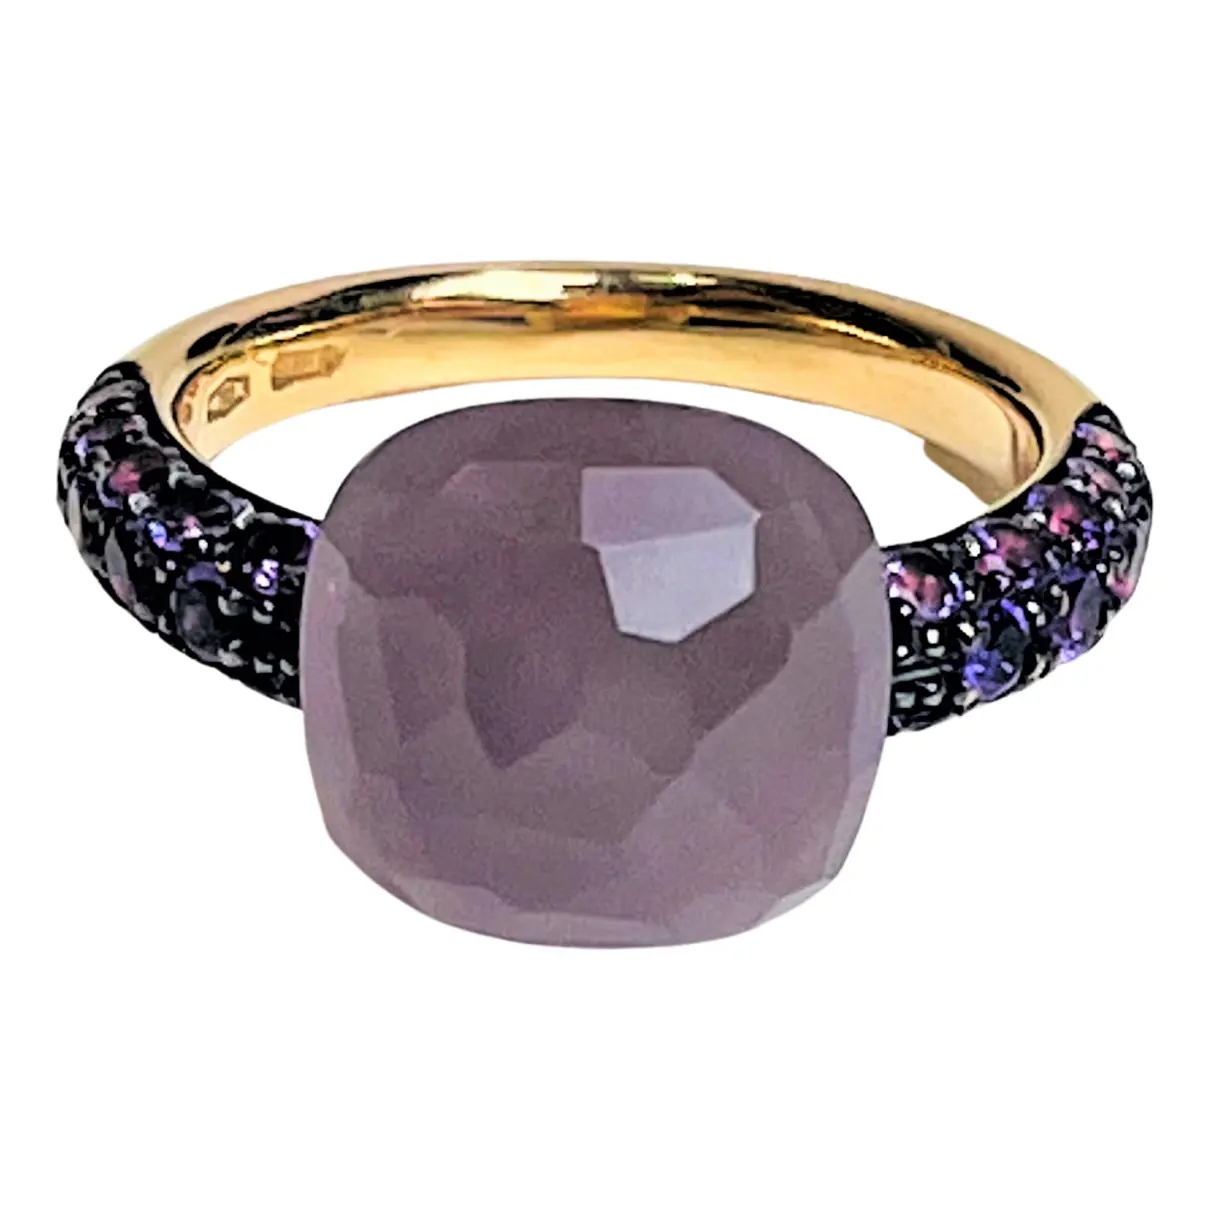 Capri pink gold ring